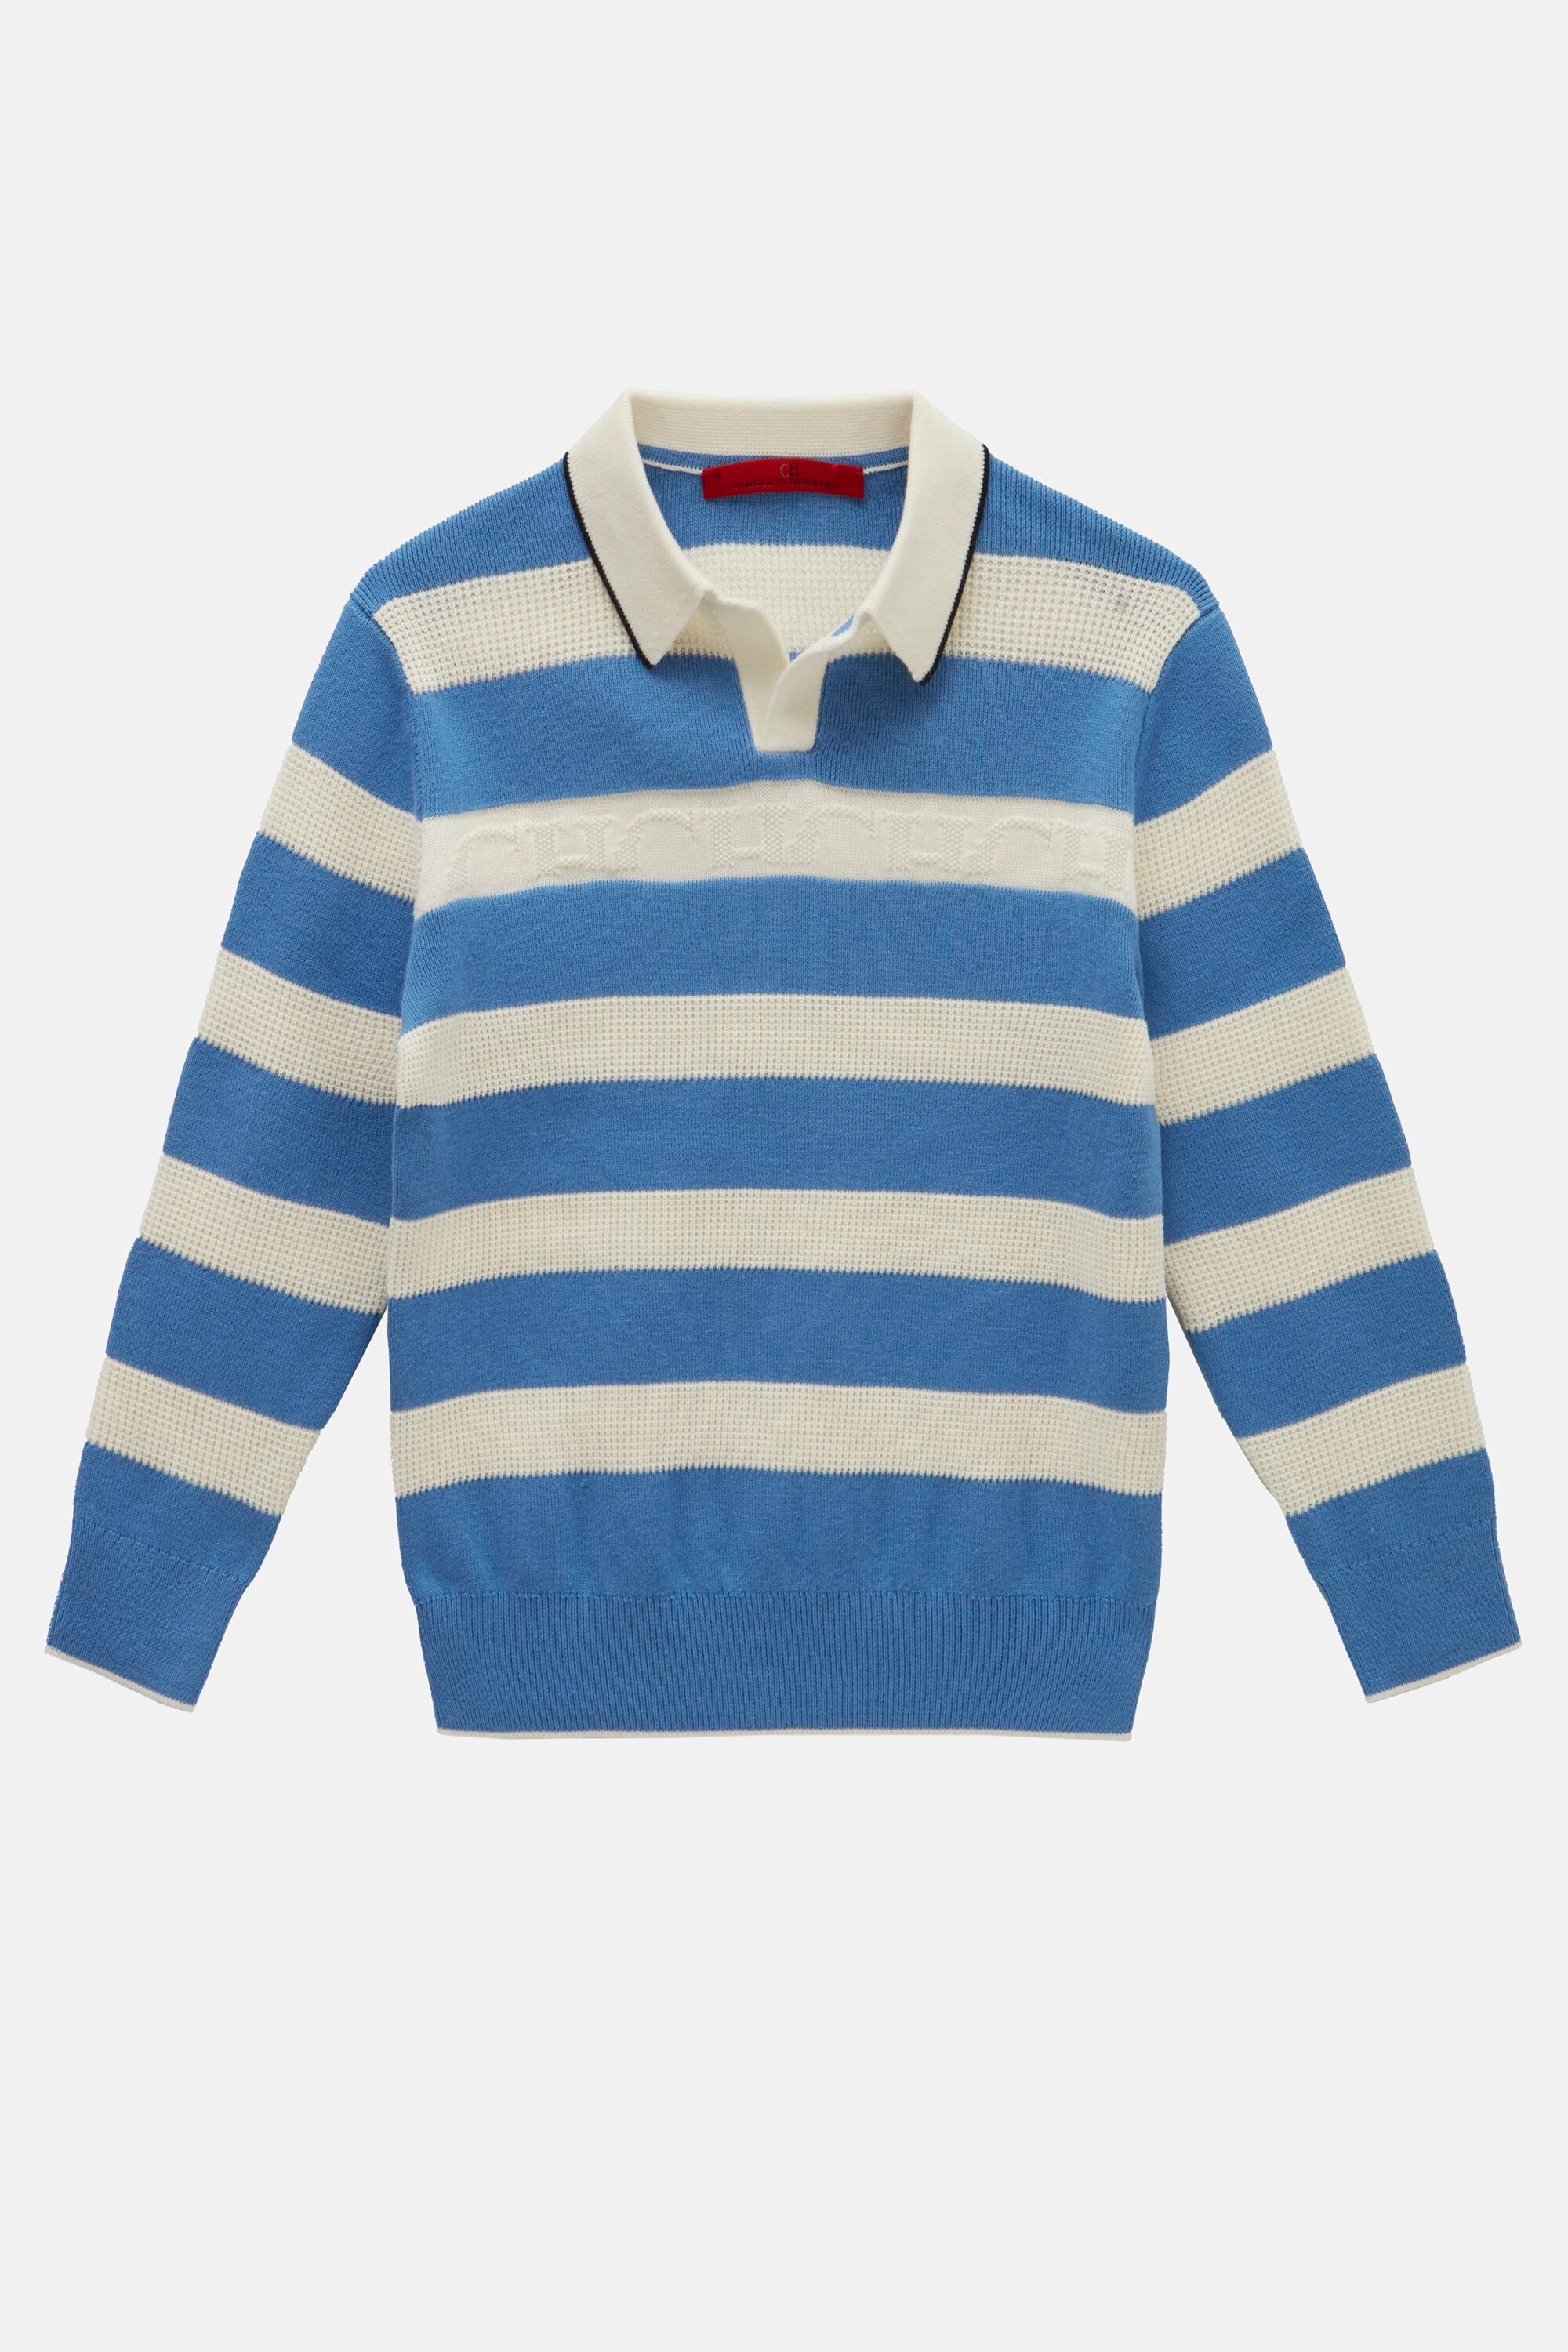 CH striped knit polo shirt